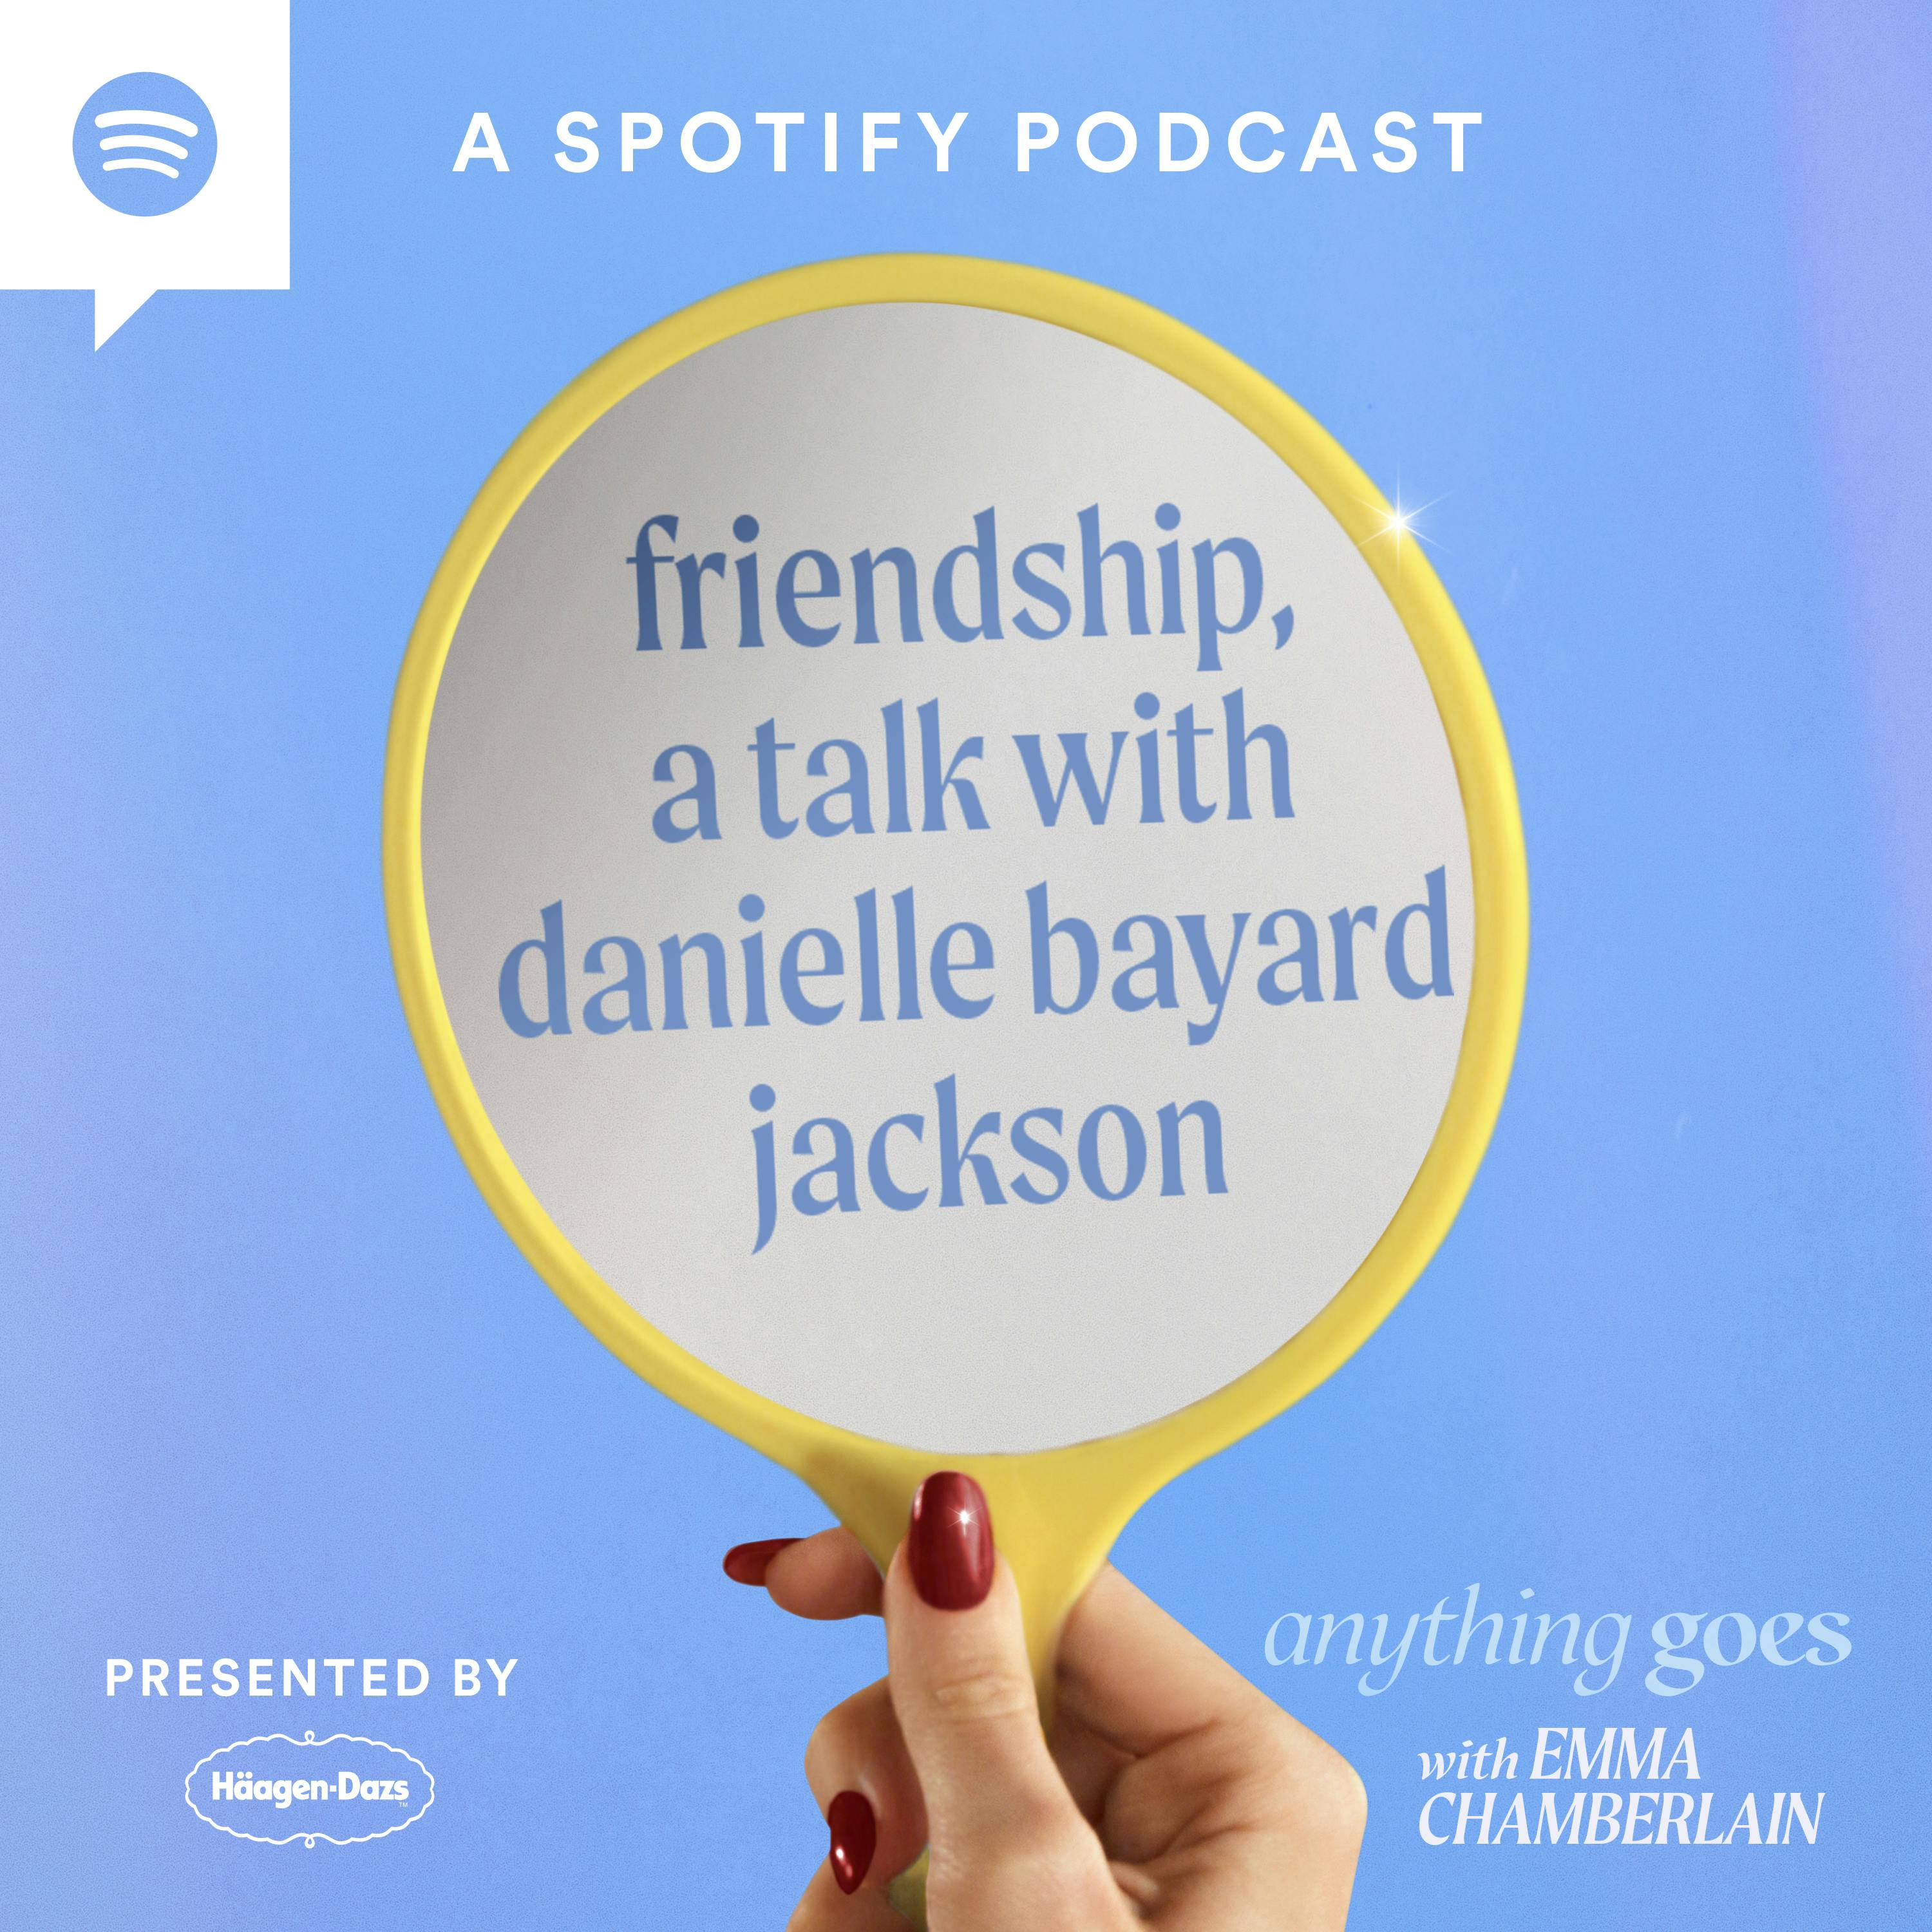 friendship, a talk with danielle bayard jackson [video]